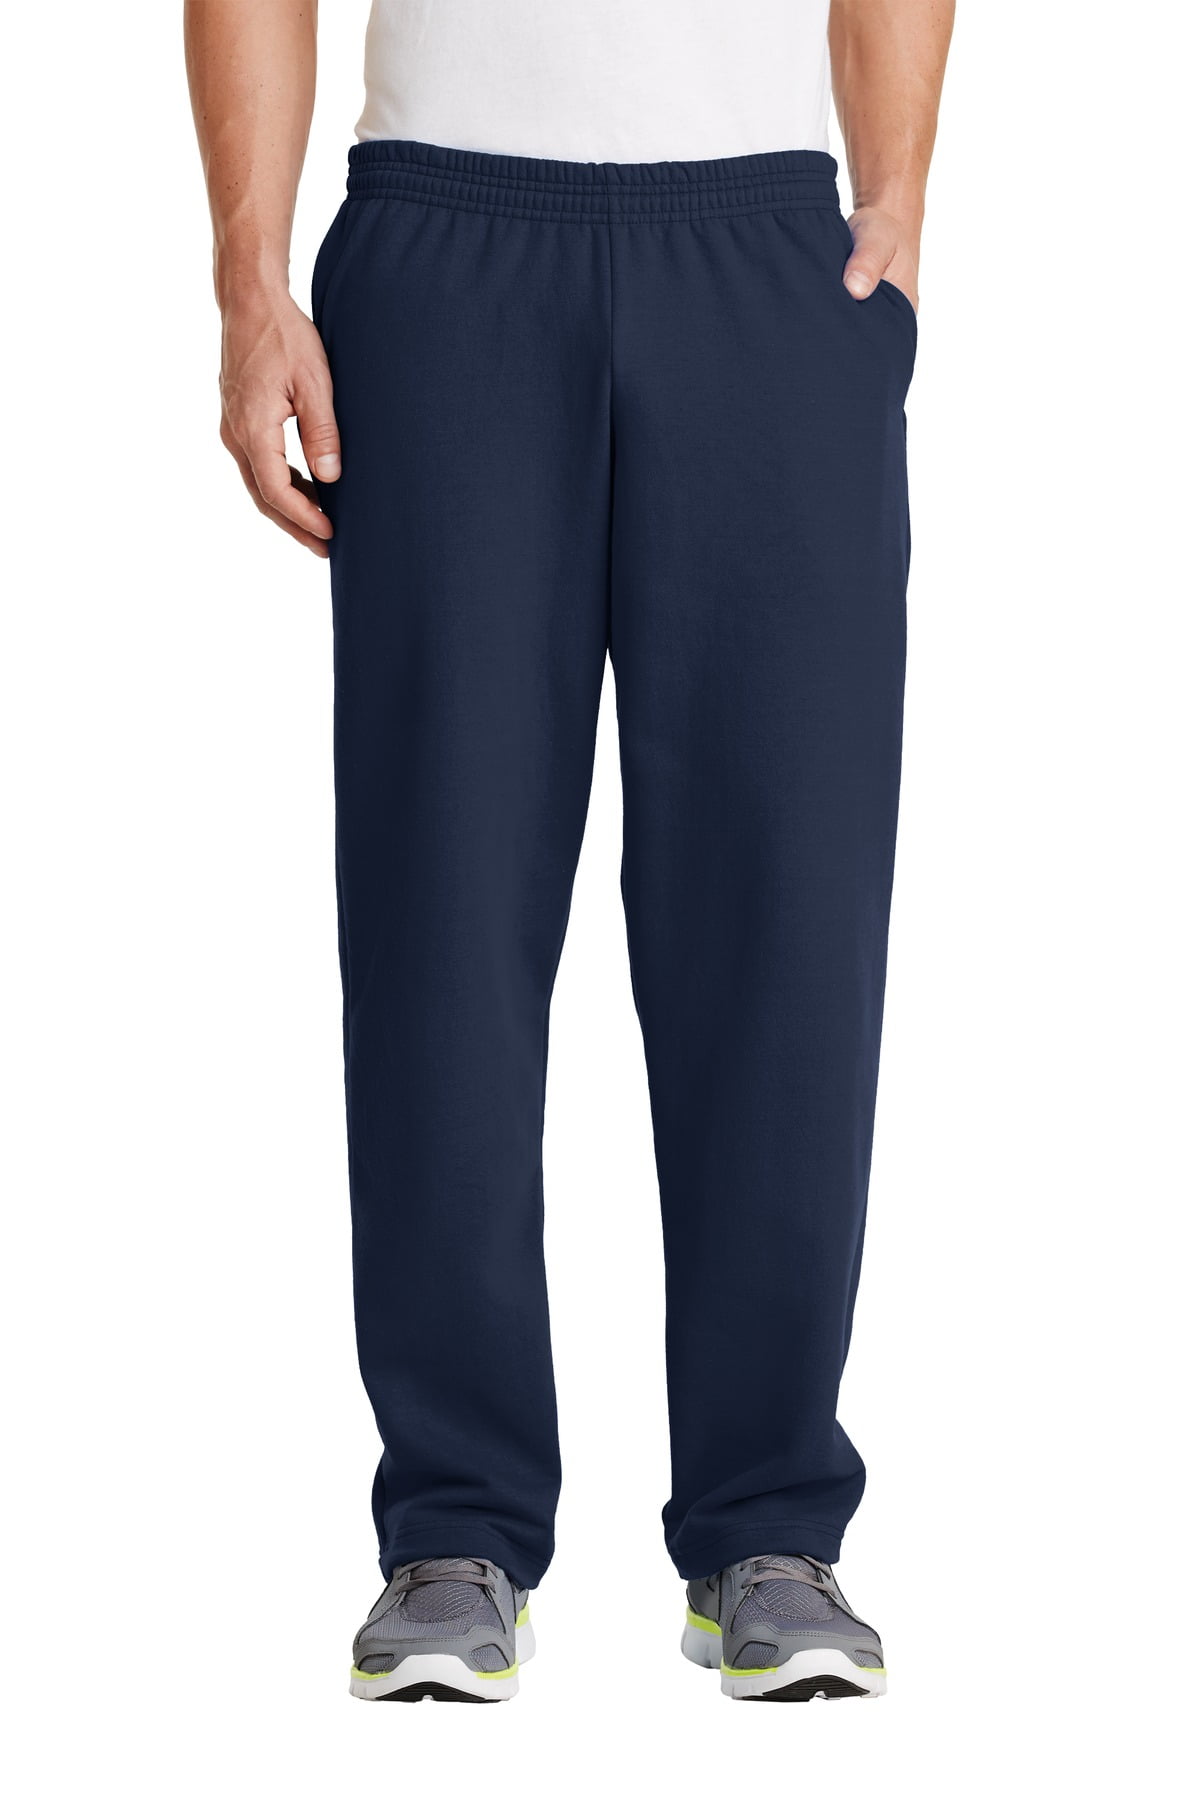 Port & Company Core Fleece Sweatpant with Pockets-XL (Navy) - Walmart.com